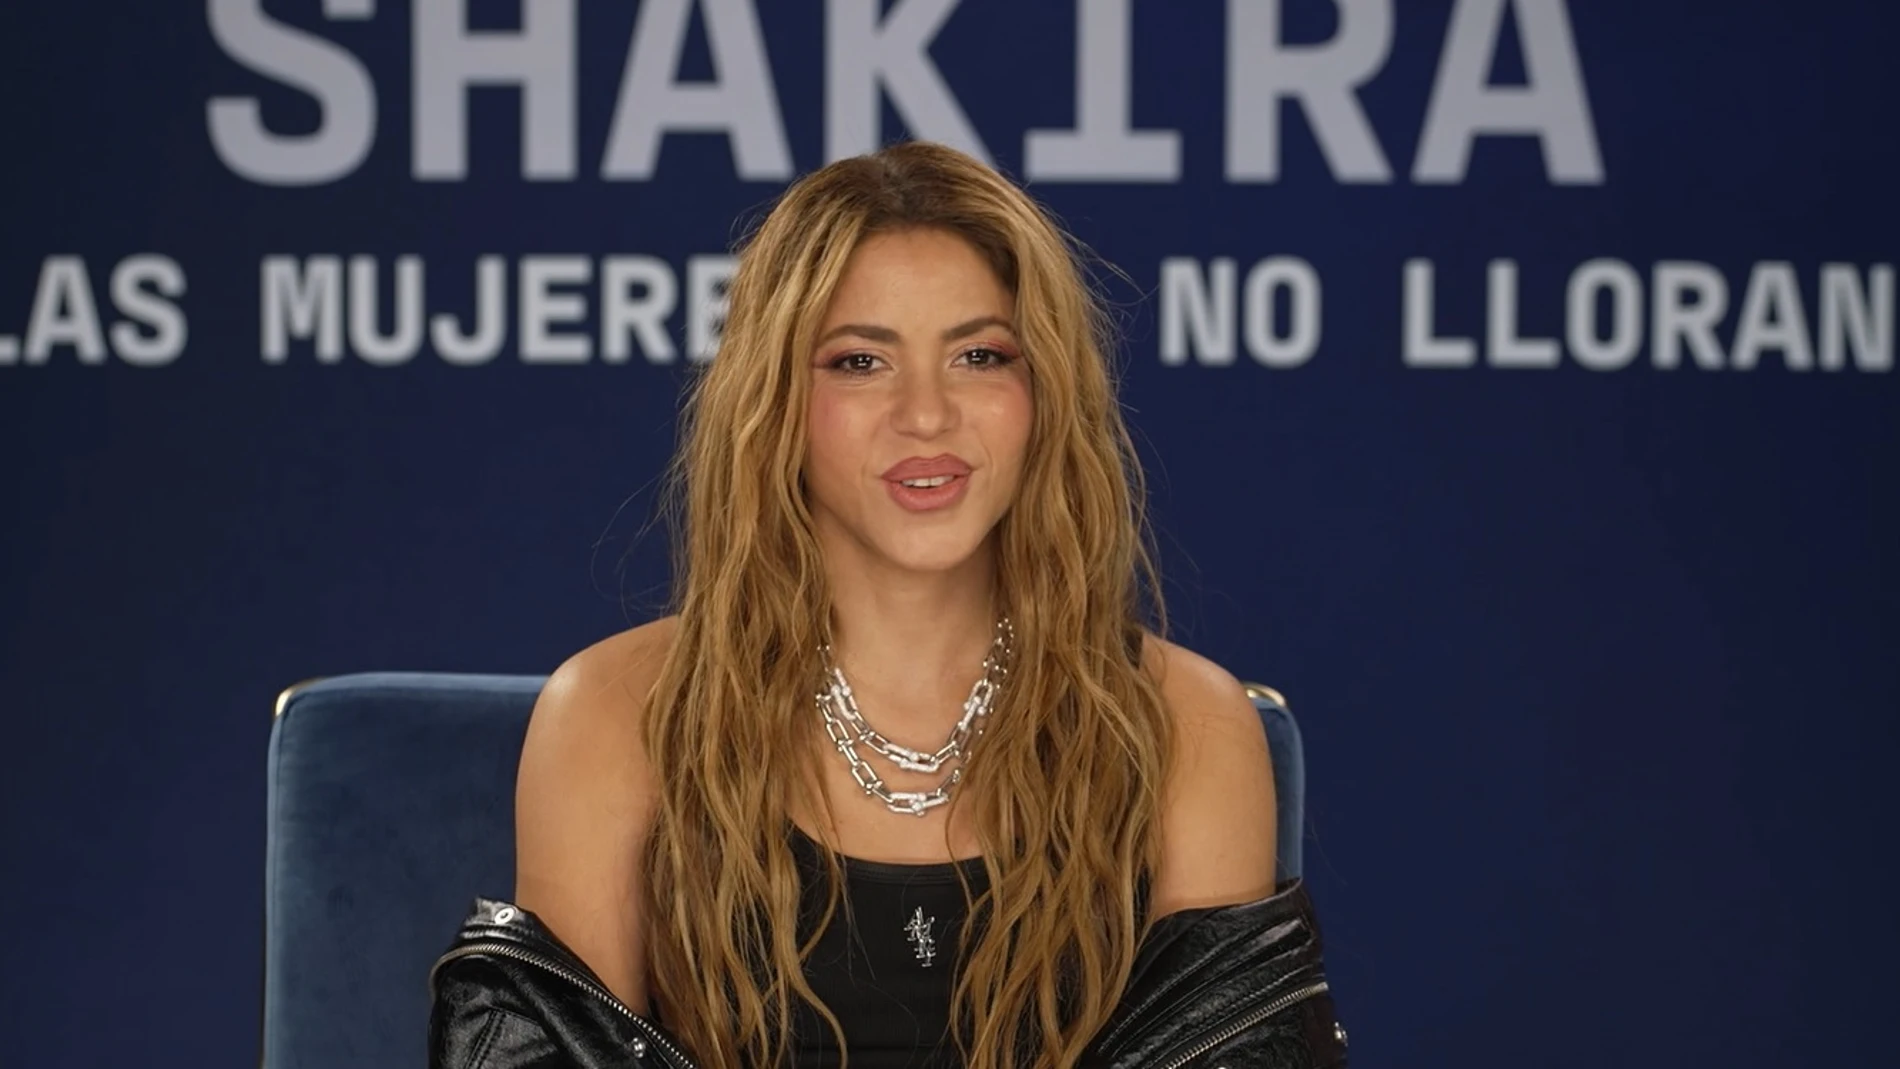 Shakira presenta 'Las mujers ya no lloran'